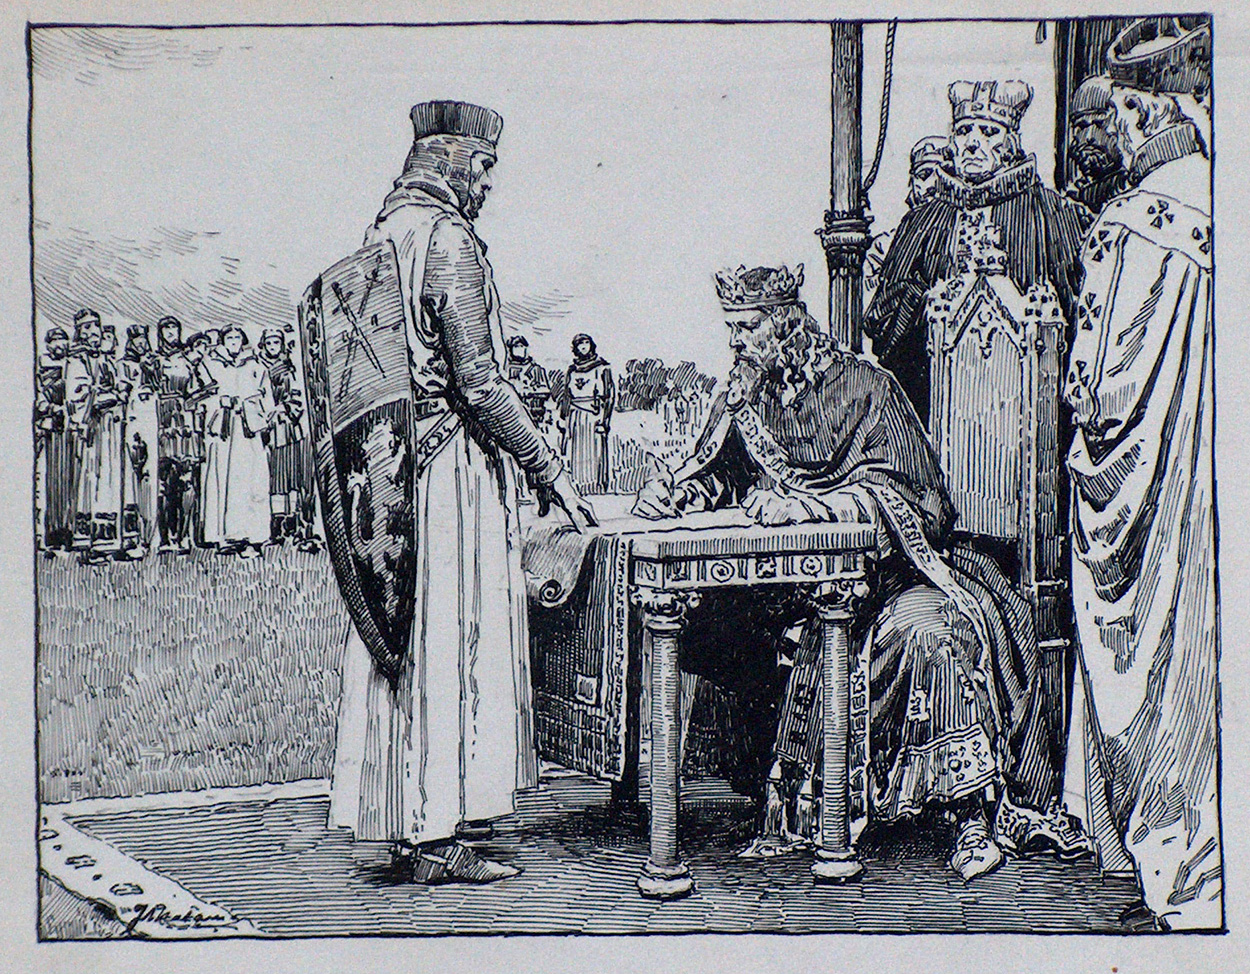 Signing the Magna Carta (Original) (Signed) art by Royalty (Matania) at The Illustration Art Gallery